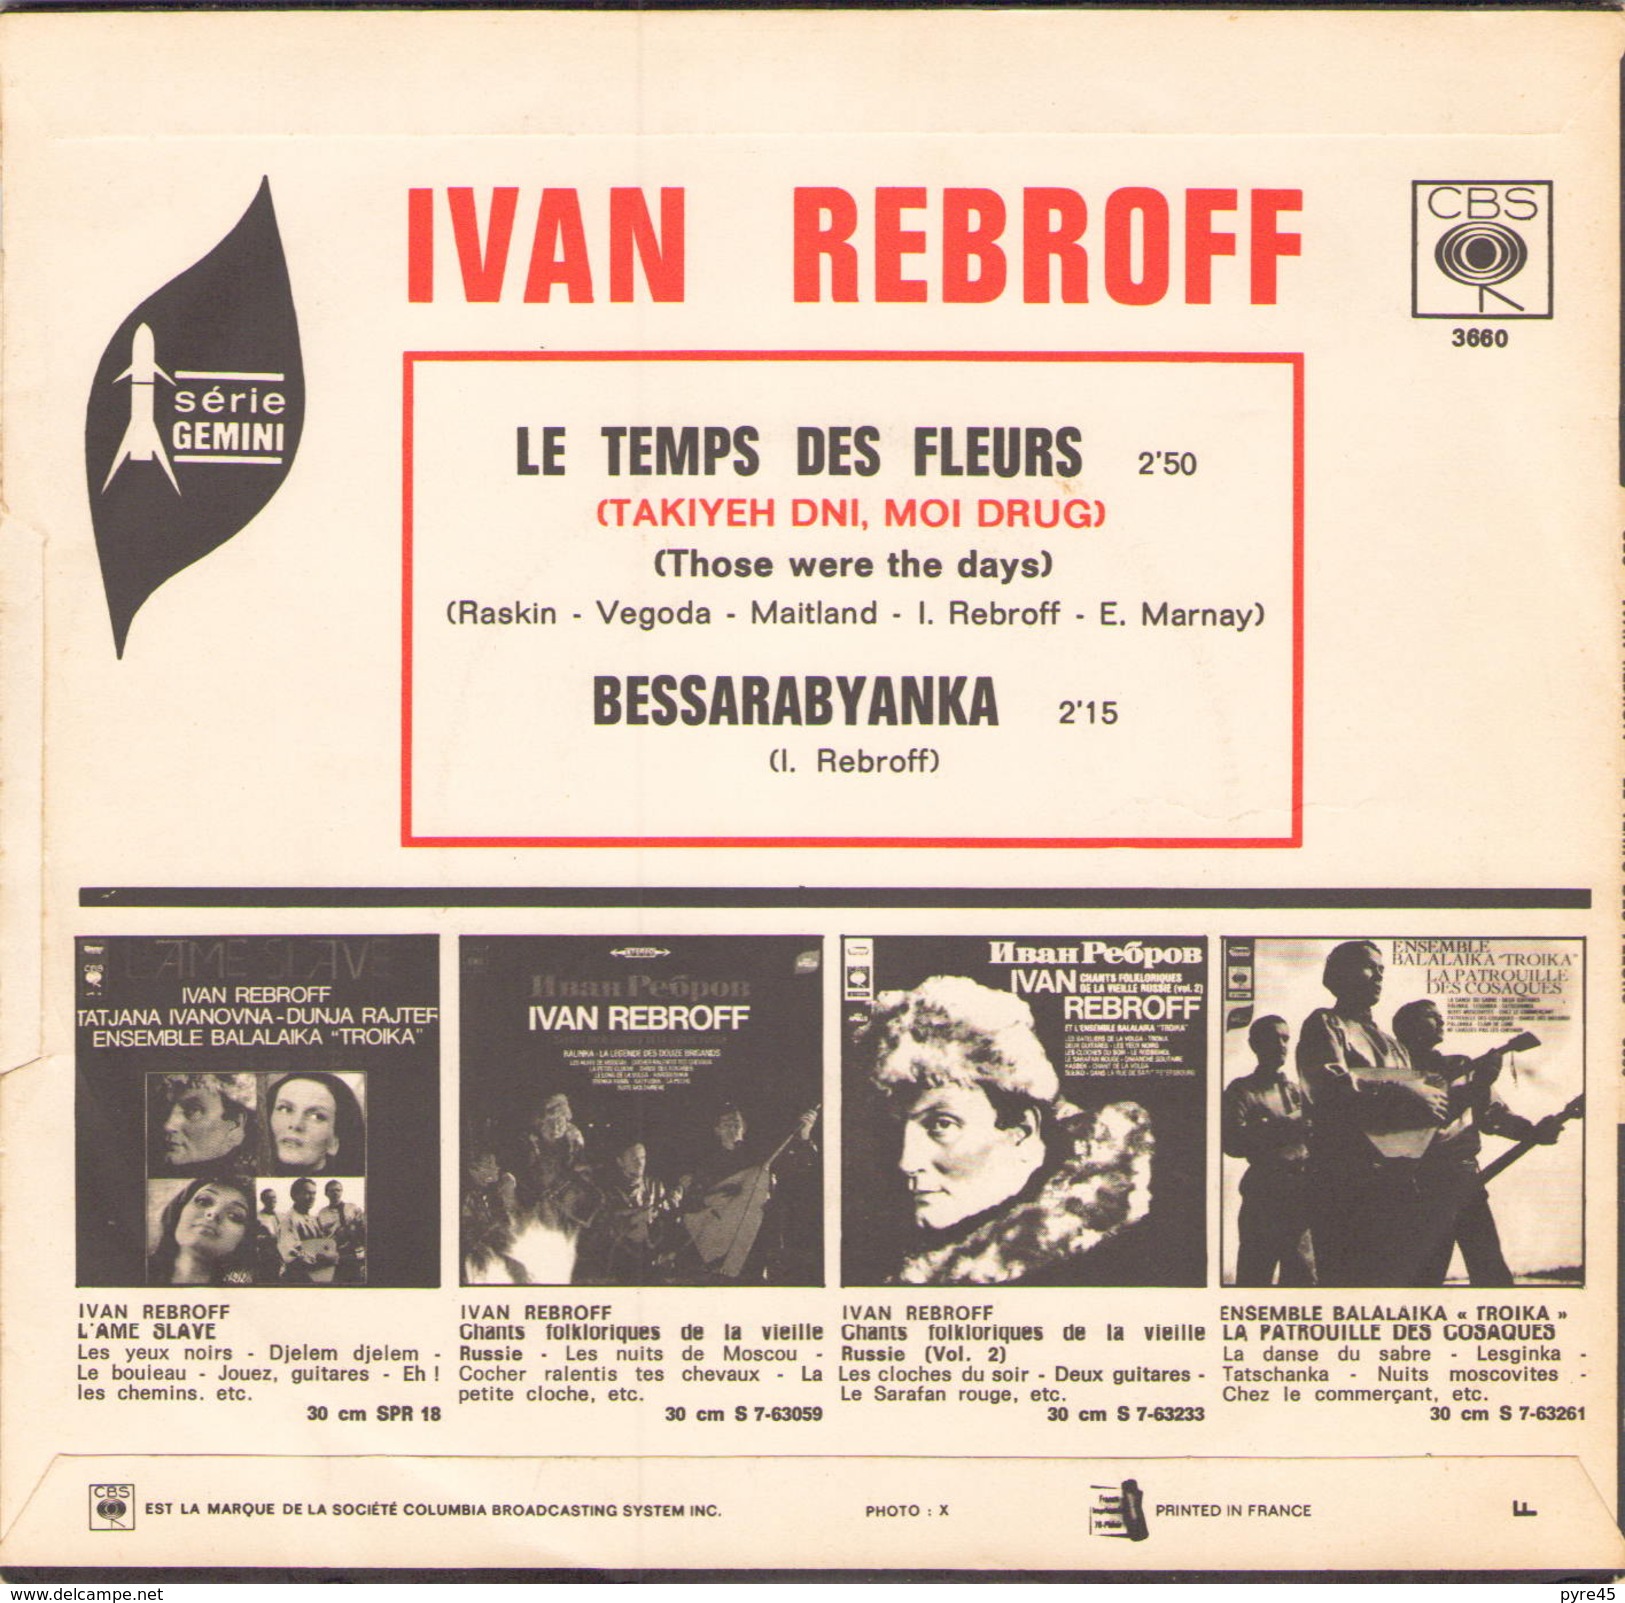 45 TOURS IVAN REBROFF CBS 3660 LE TEMPS DES FLEURS / BESSARABYANKA - World Music